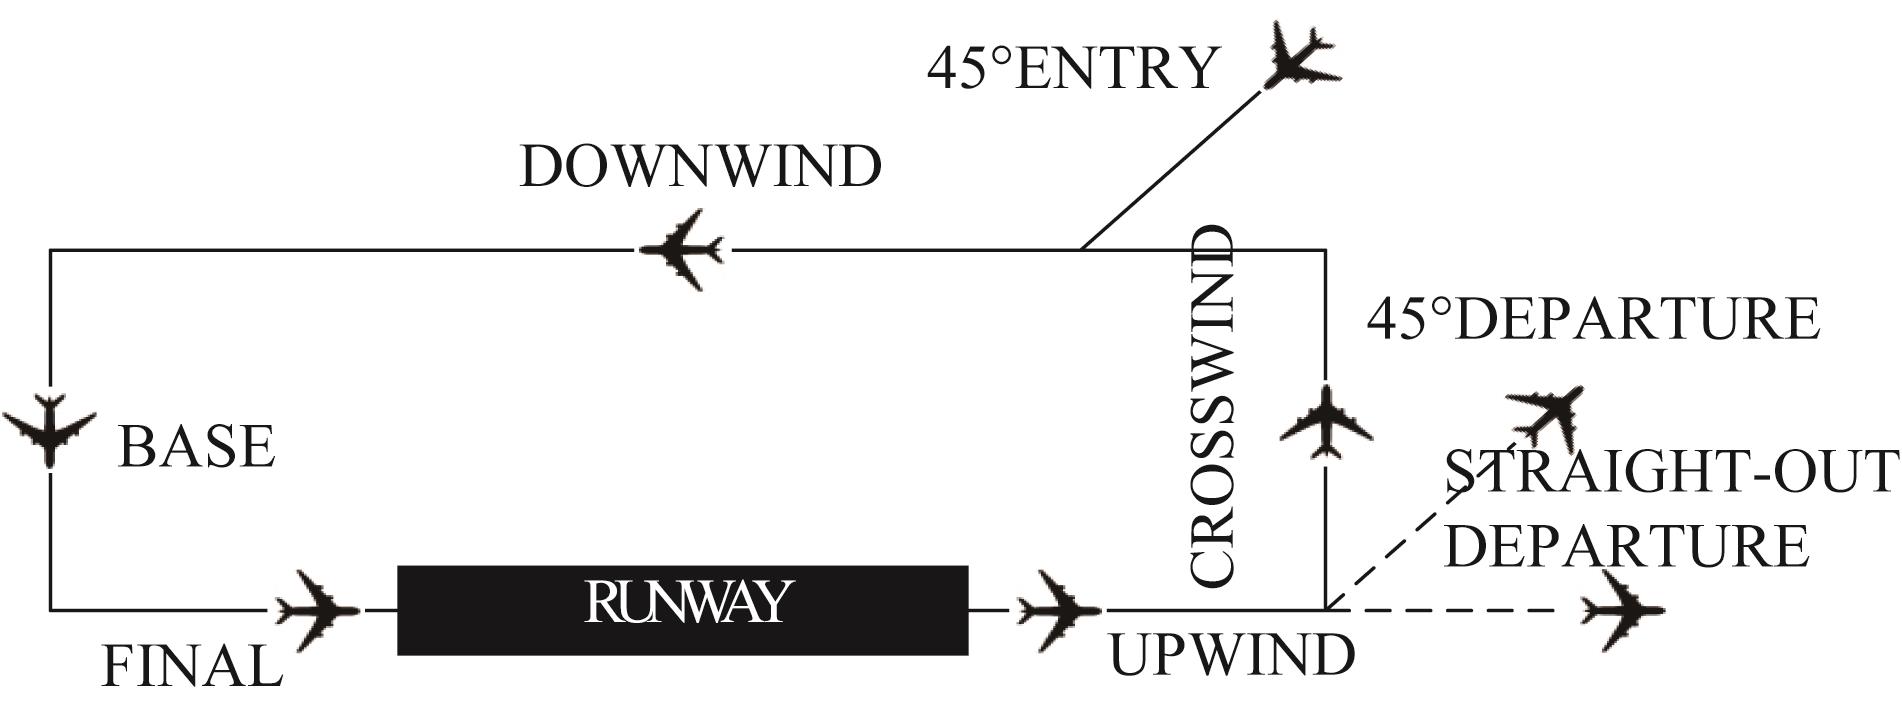 Diagram of airfield traffic pattern